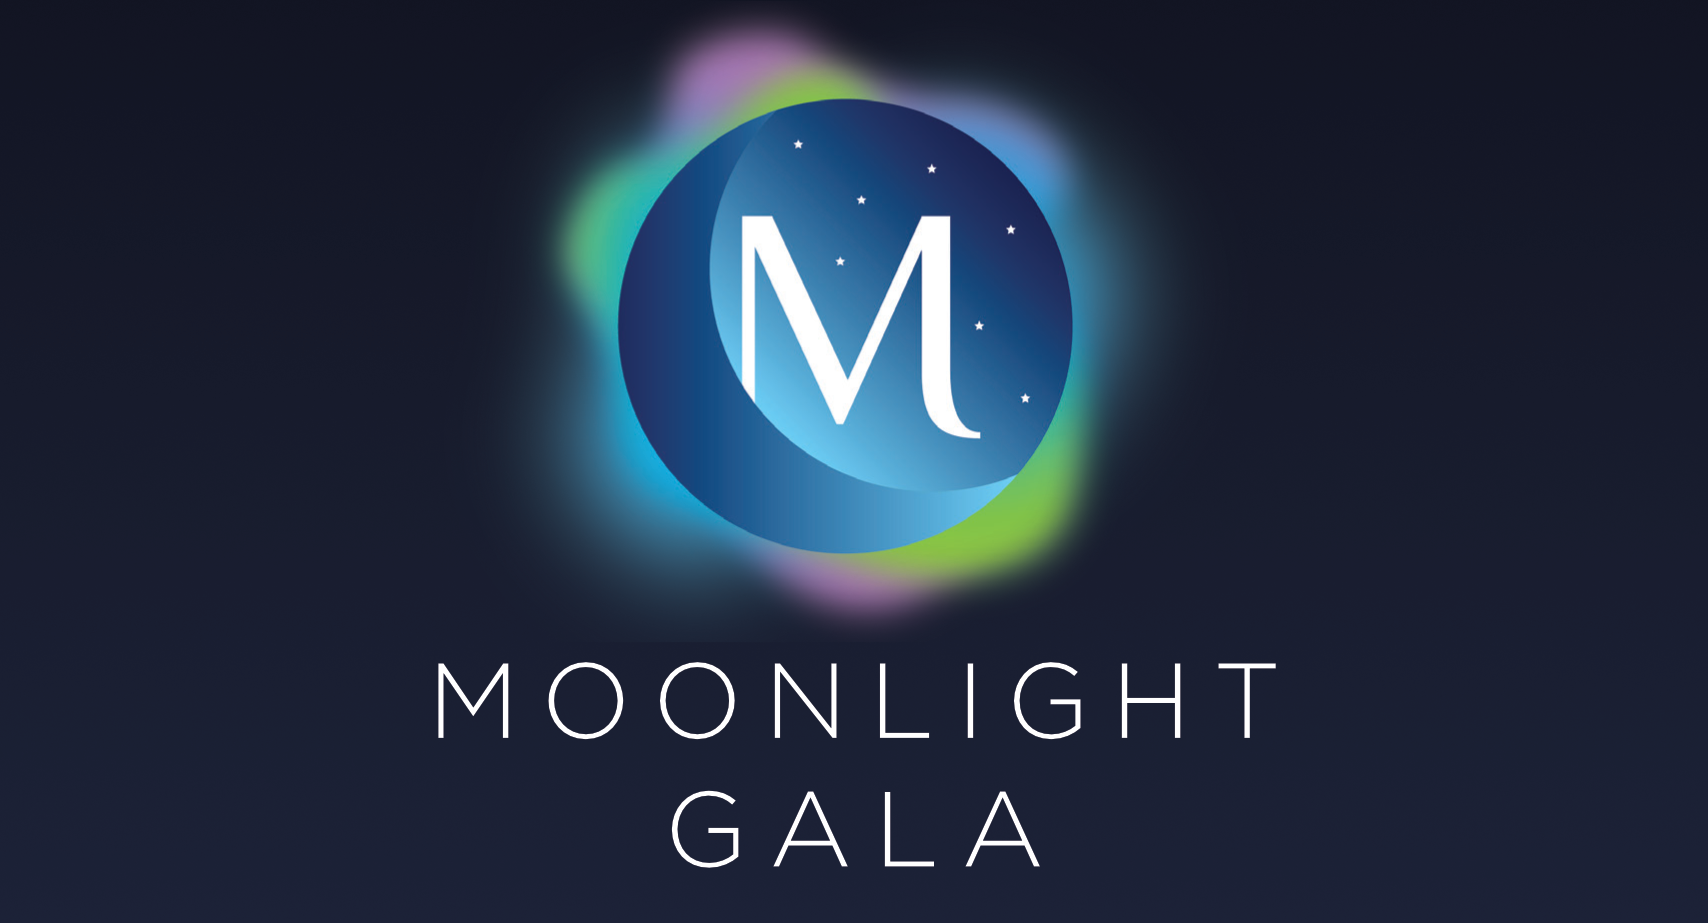 Torontoism Invites You to Moonlight Gala Silver Burtnick & Associates